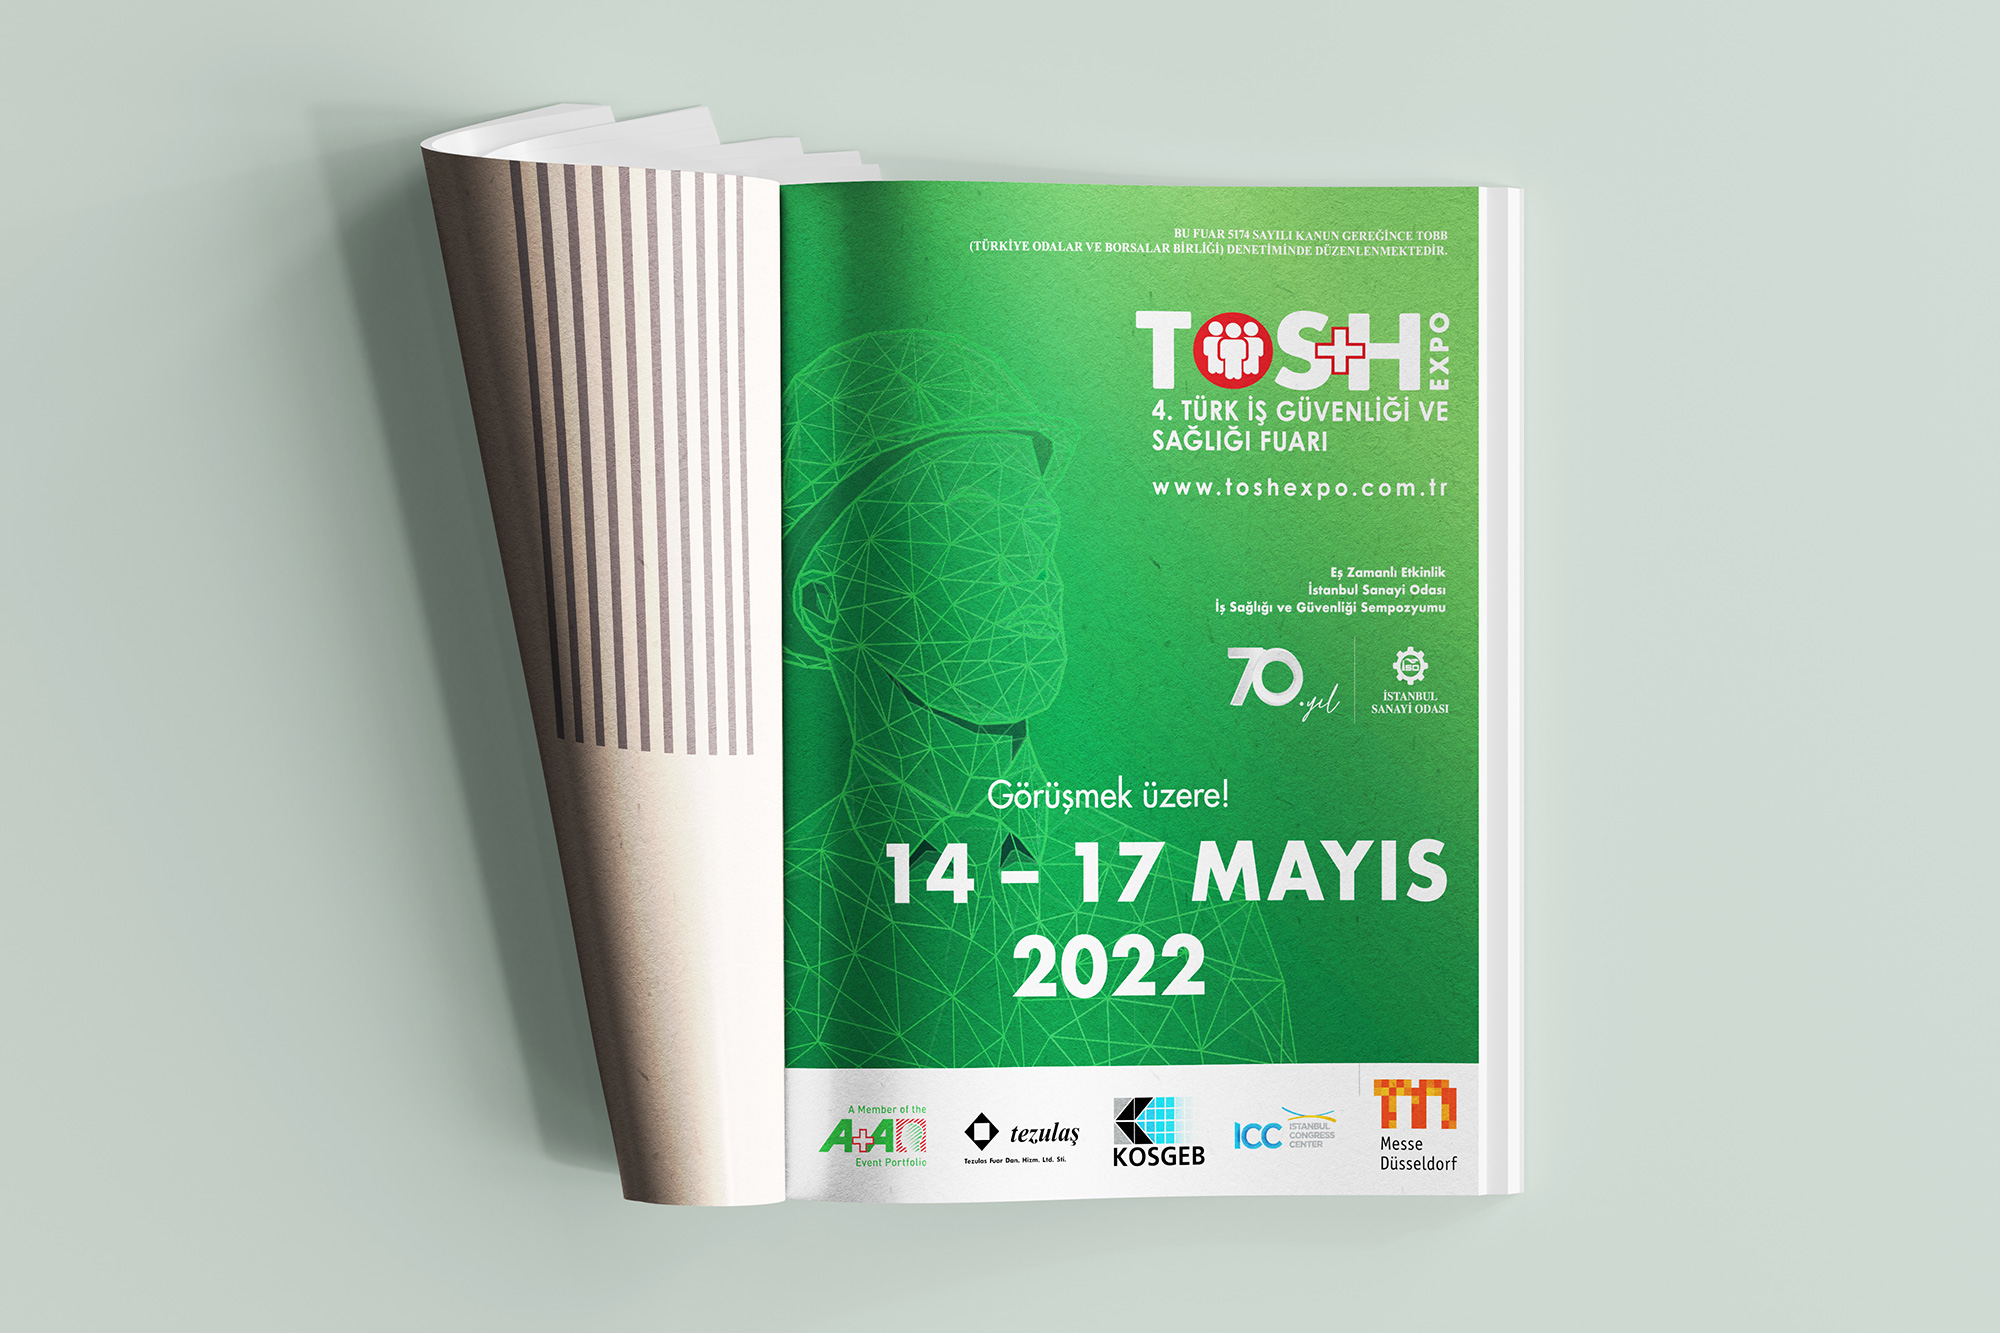 Tezulaş Messe Dusseldorf TOS+H Expo 2022 Fair Event Design